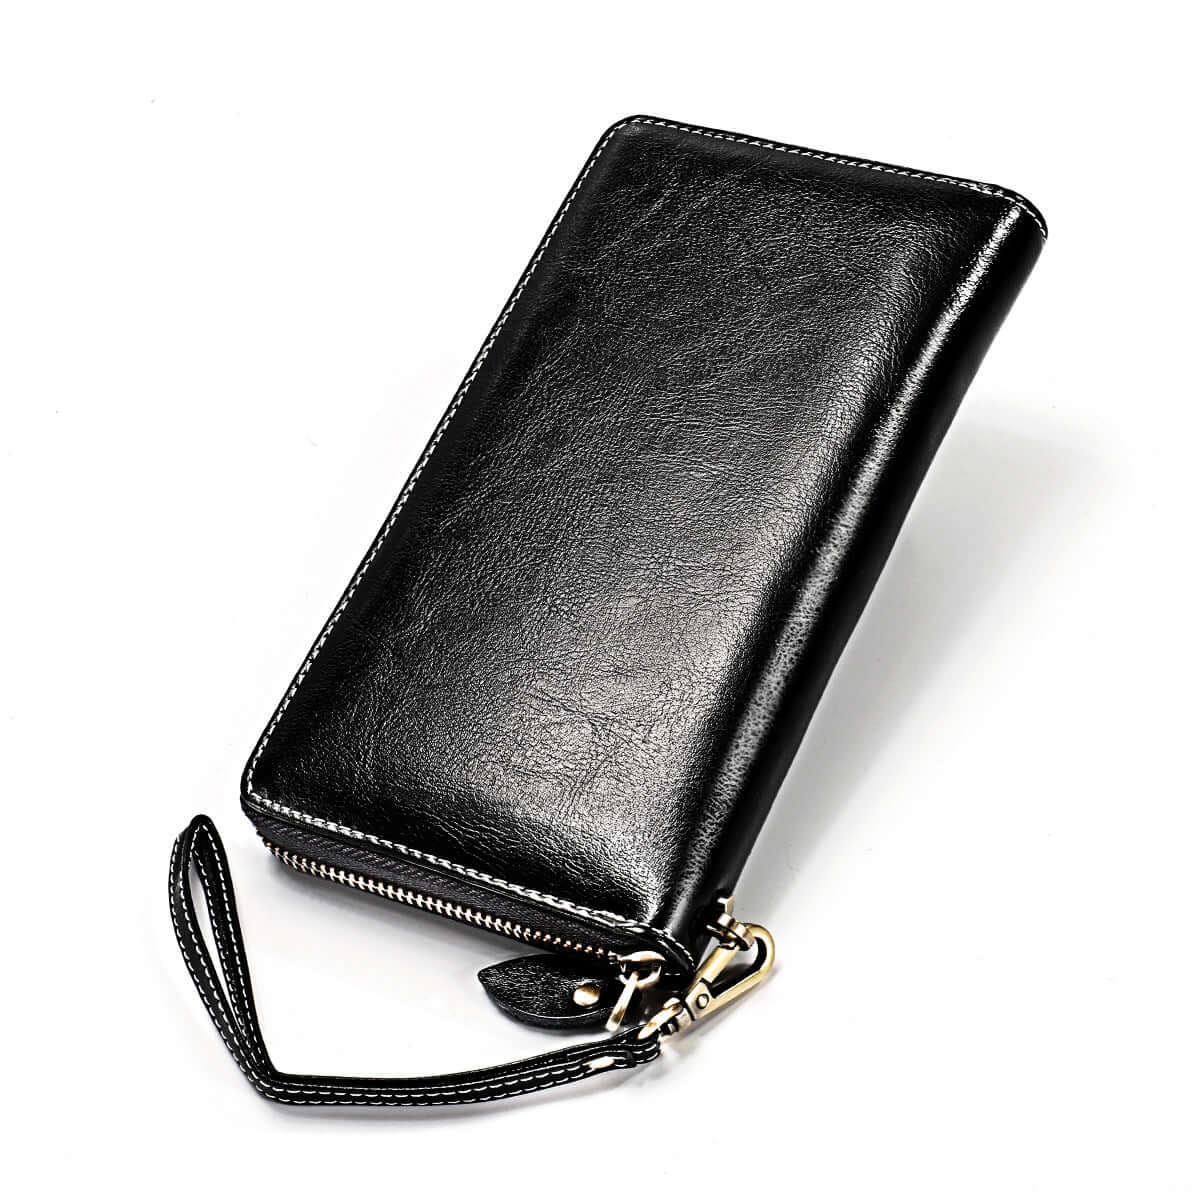 Anti-demagnetization leather wallet